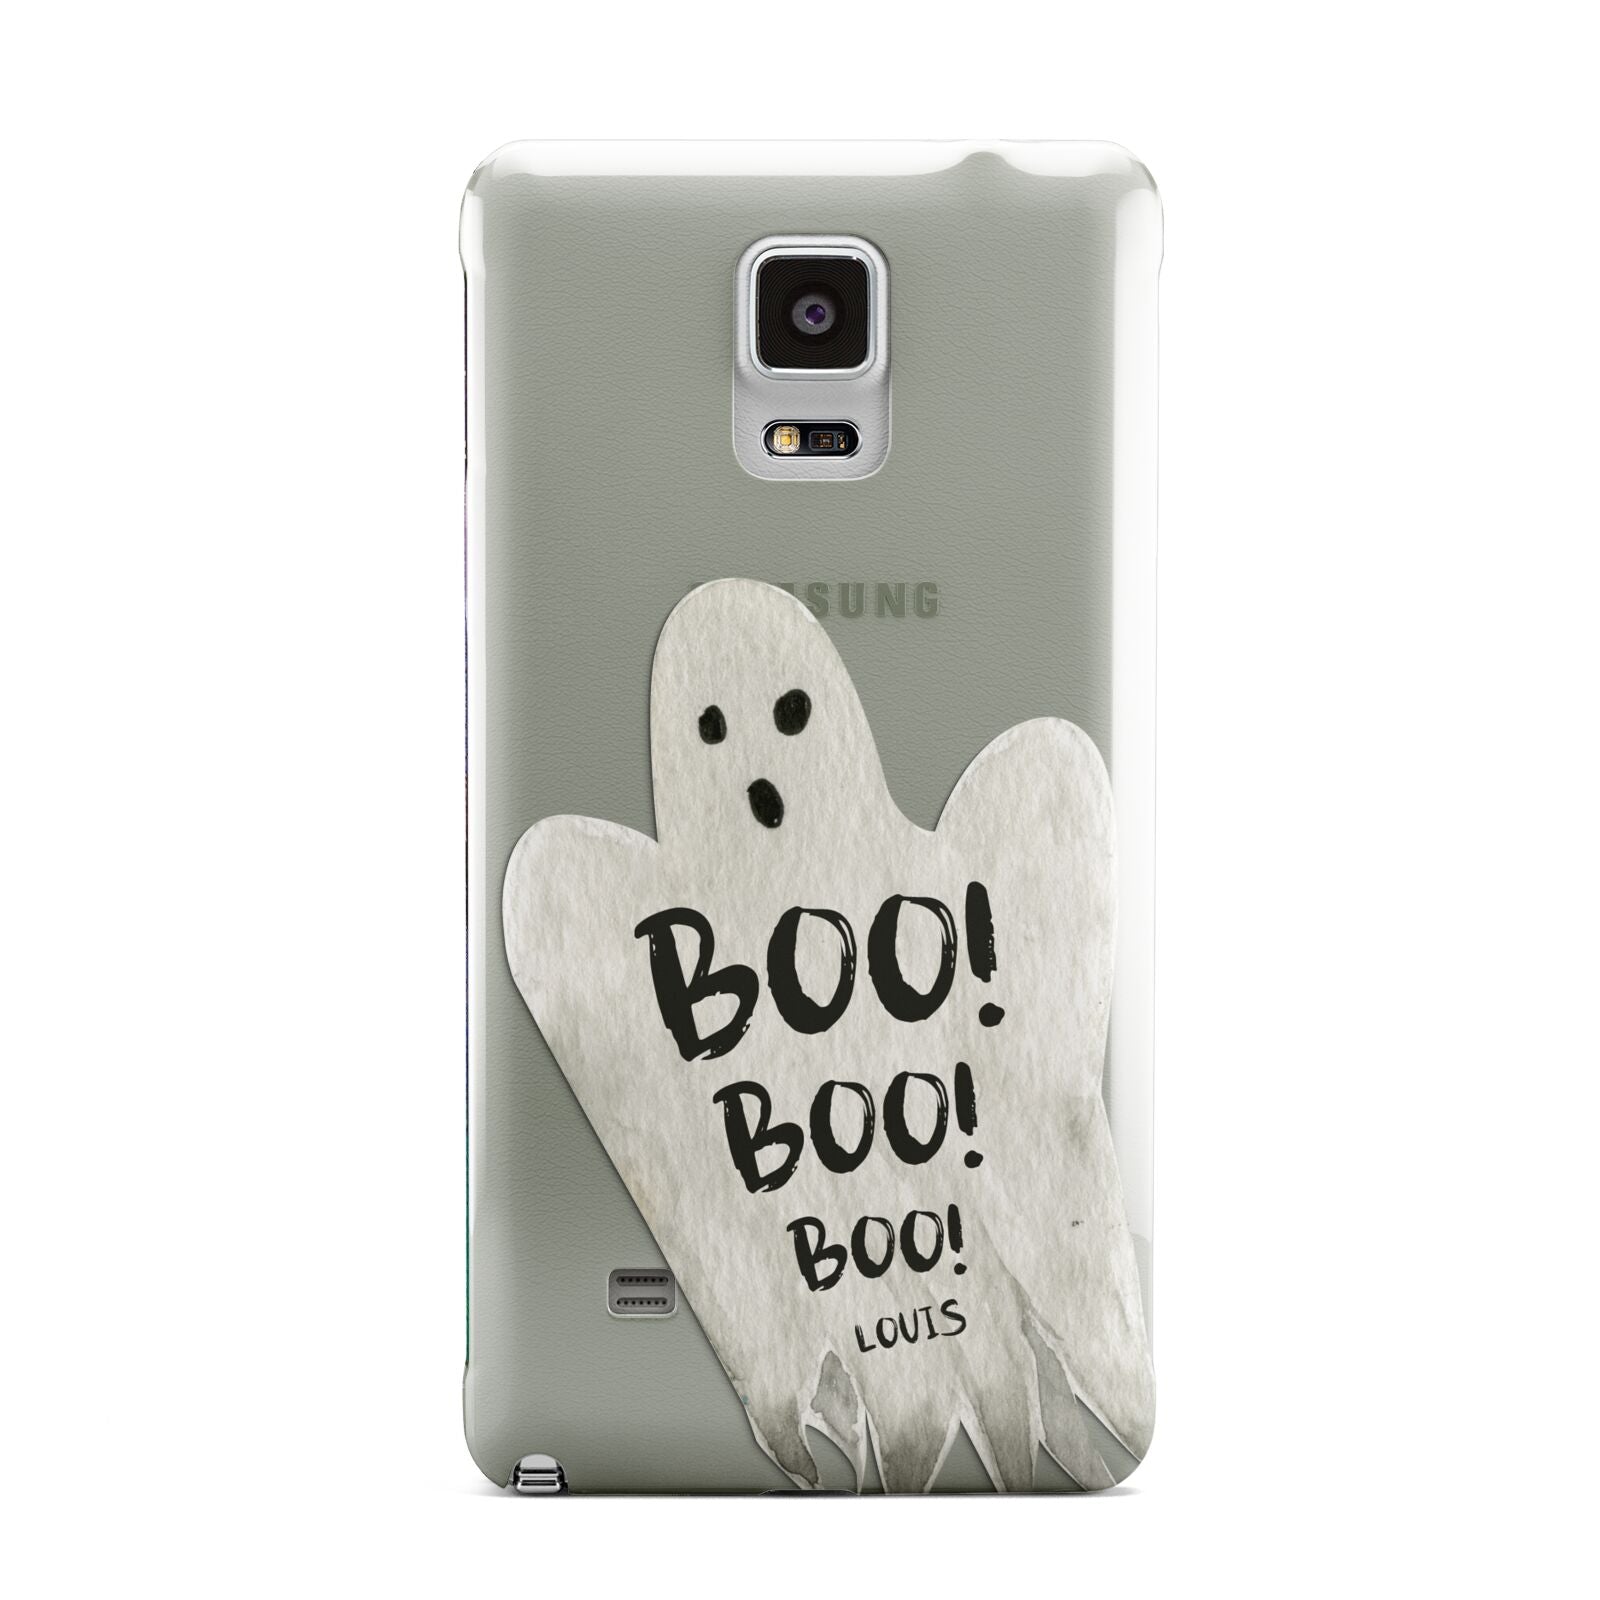 Boo Ghost Custom Samsung Galaxy Note 4 Case